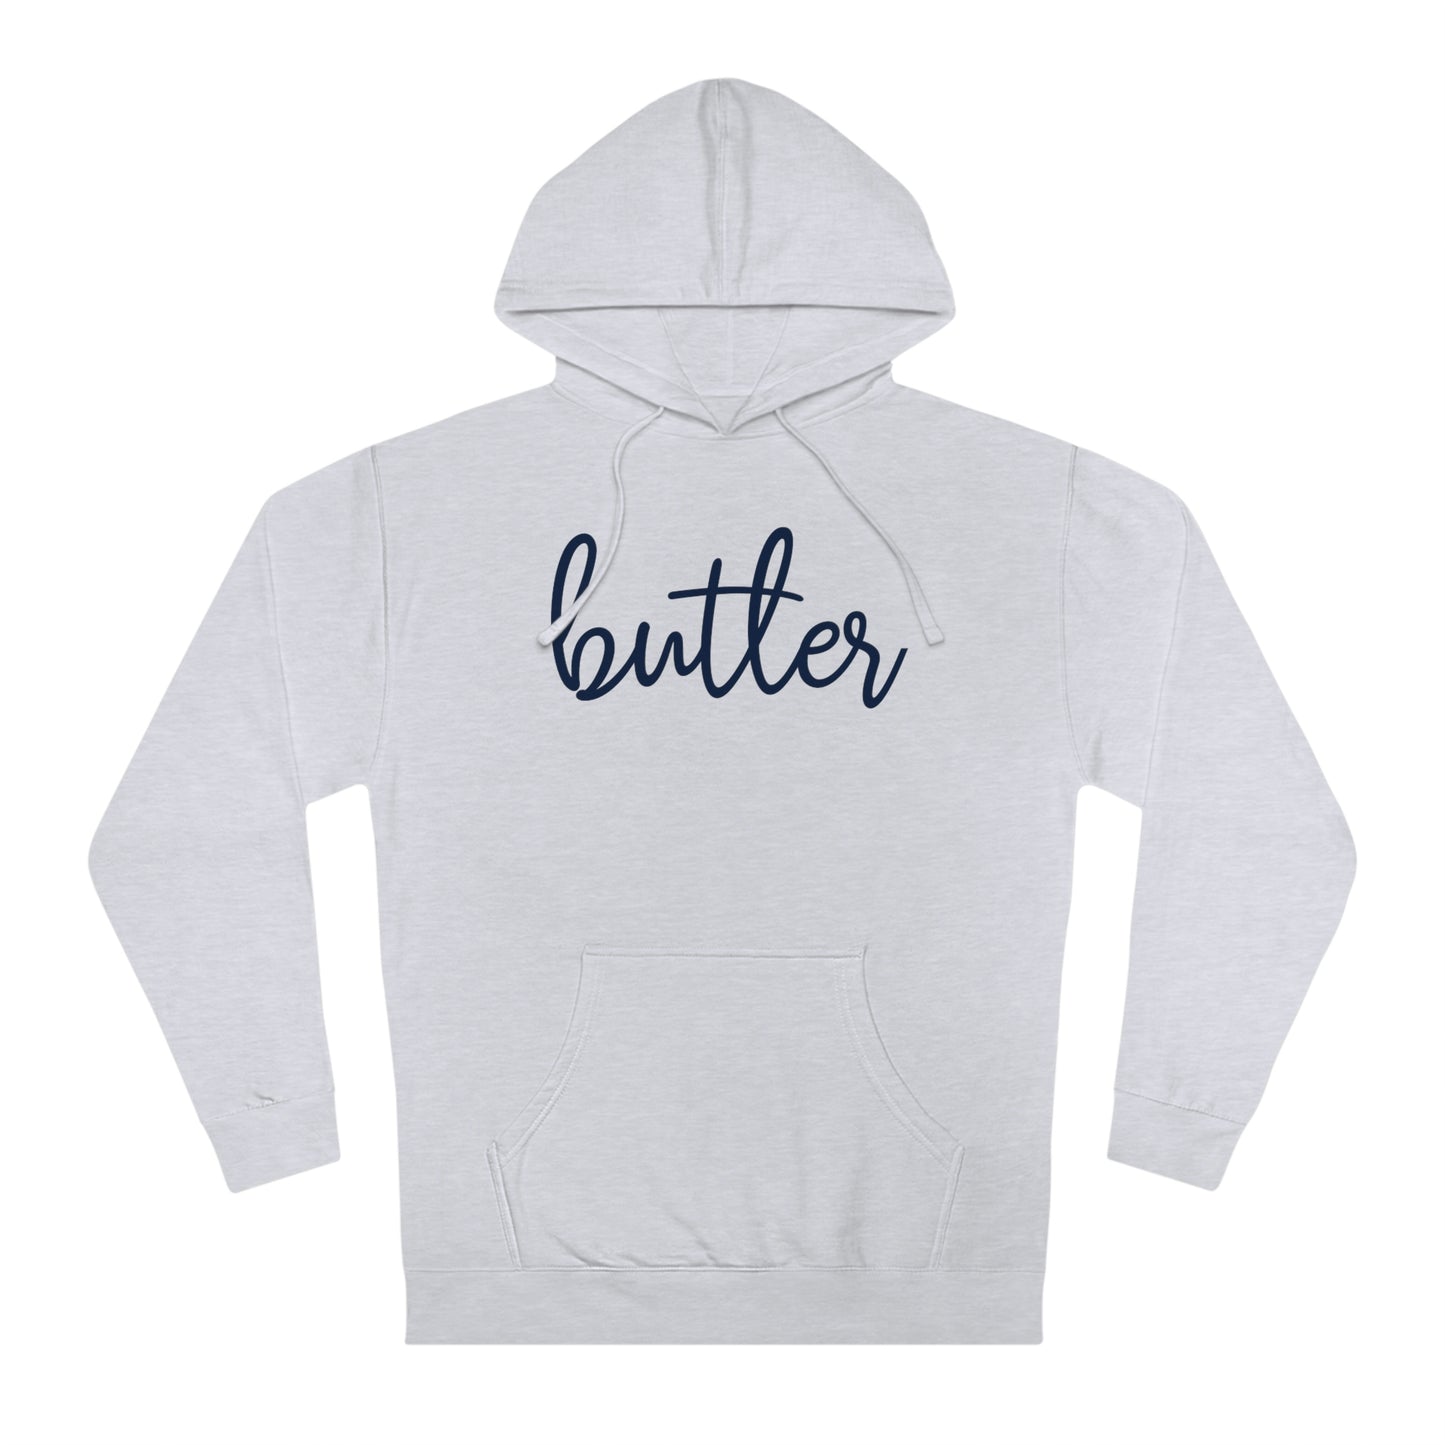 Butler Script Hooded Sweatshirt - GG - ITC